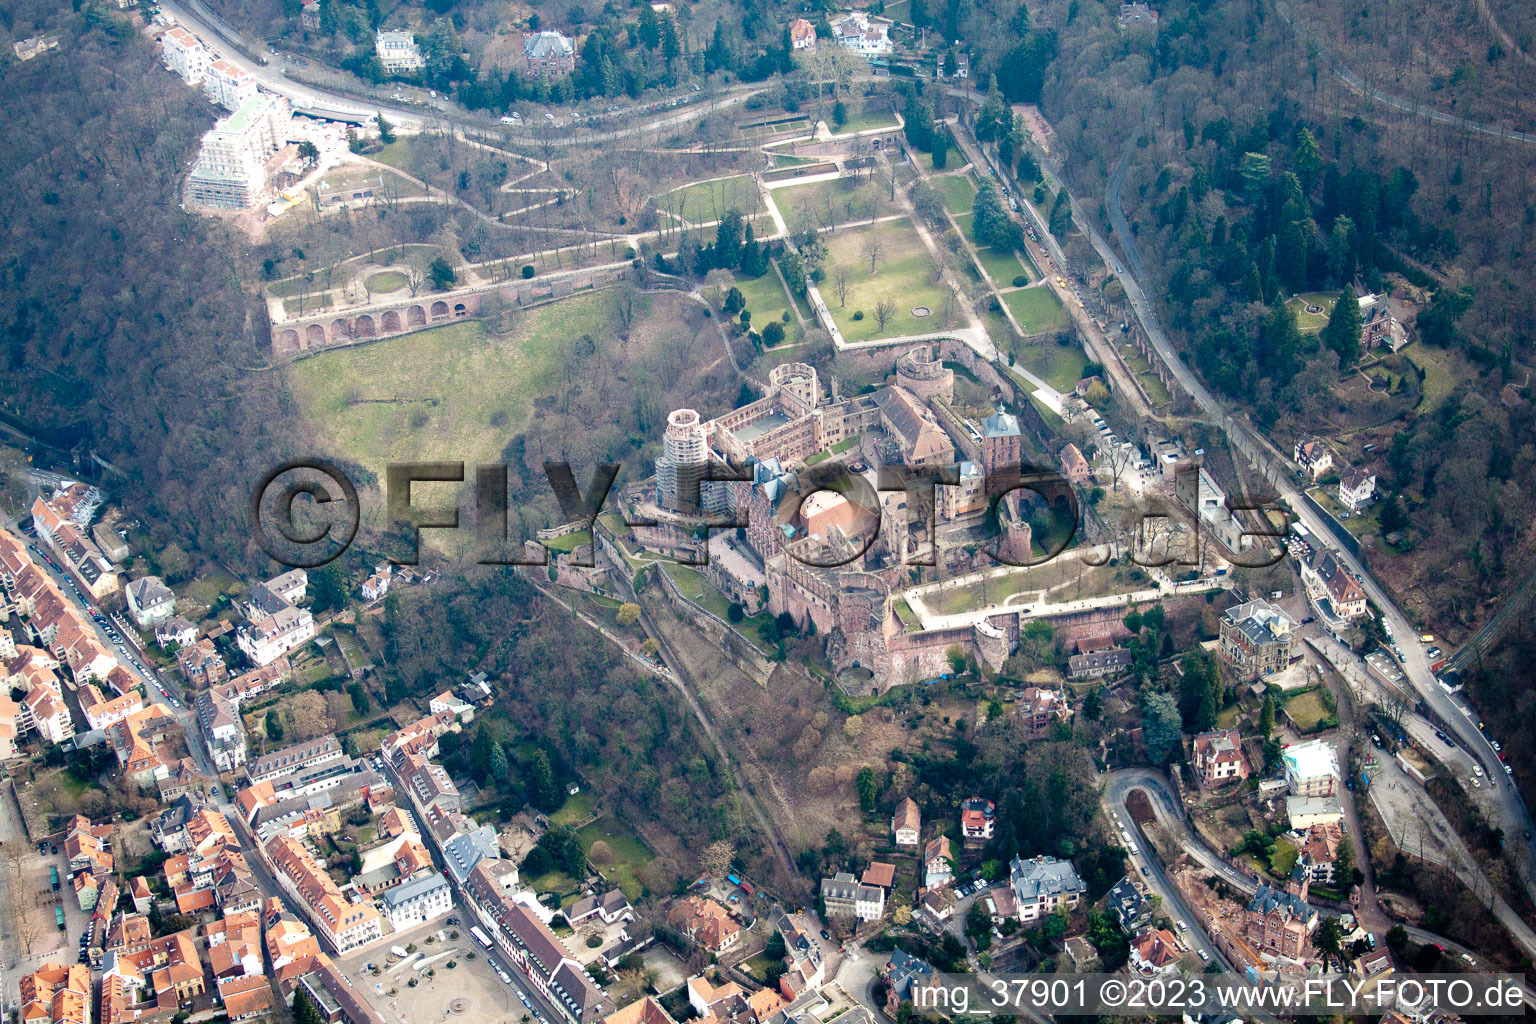 Aerial photograpy of Lock in the district Kernaltstadt in Heidelberg in the state Baden-Wuerttemberg, Germany